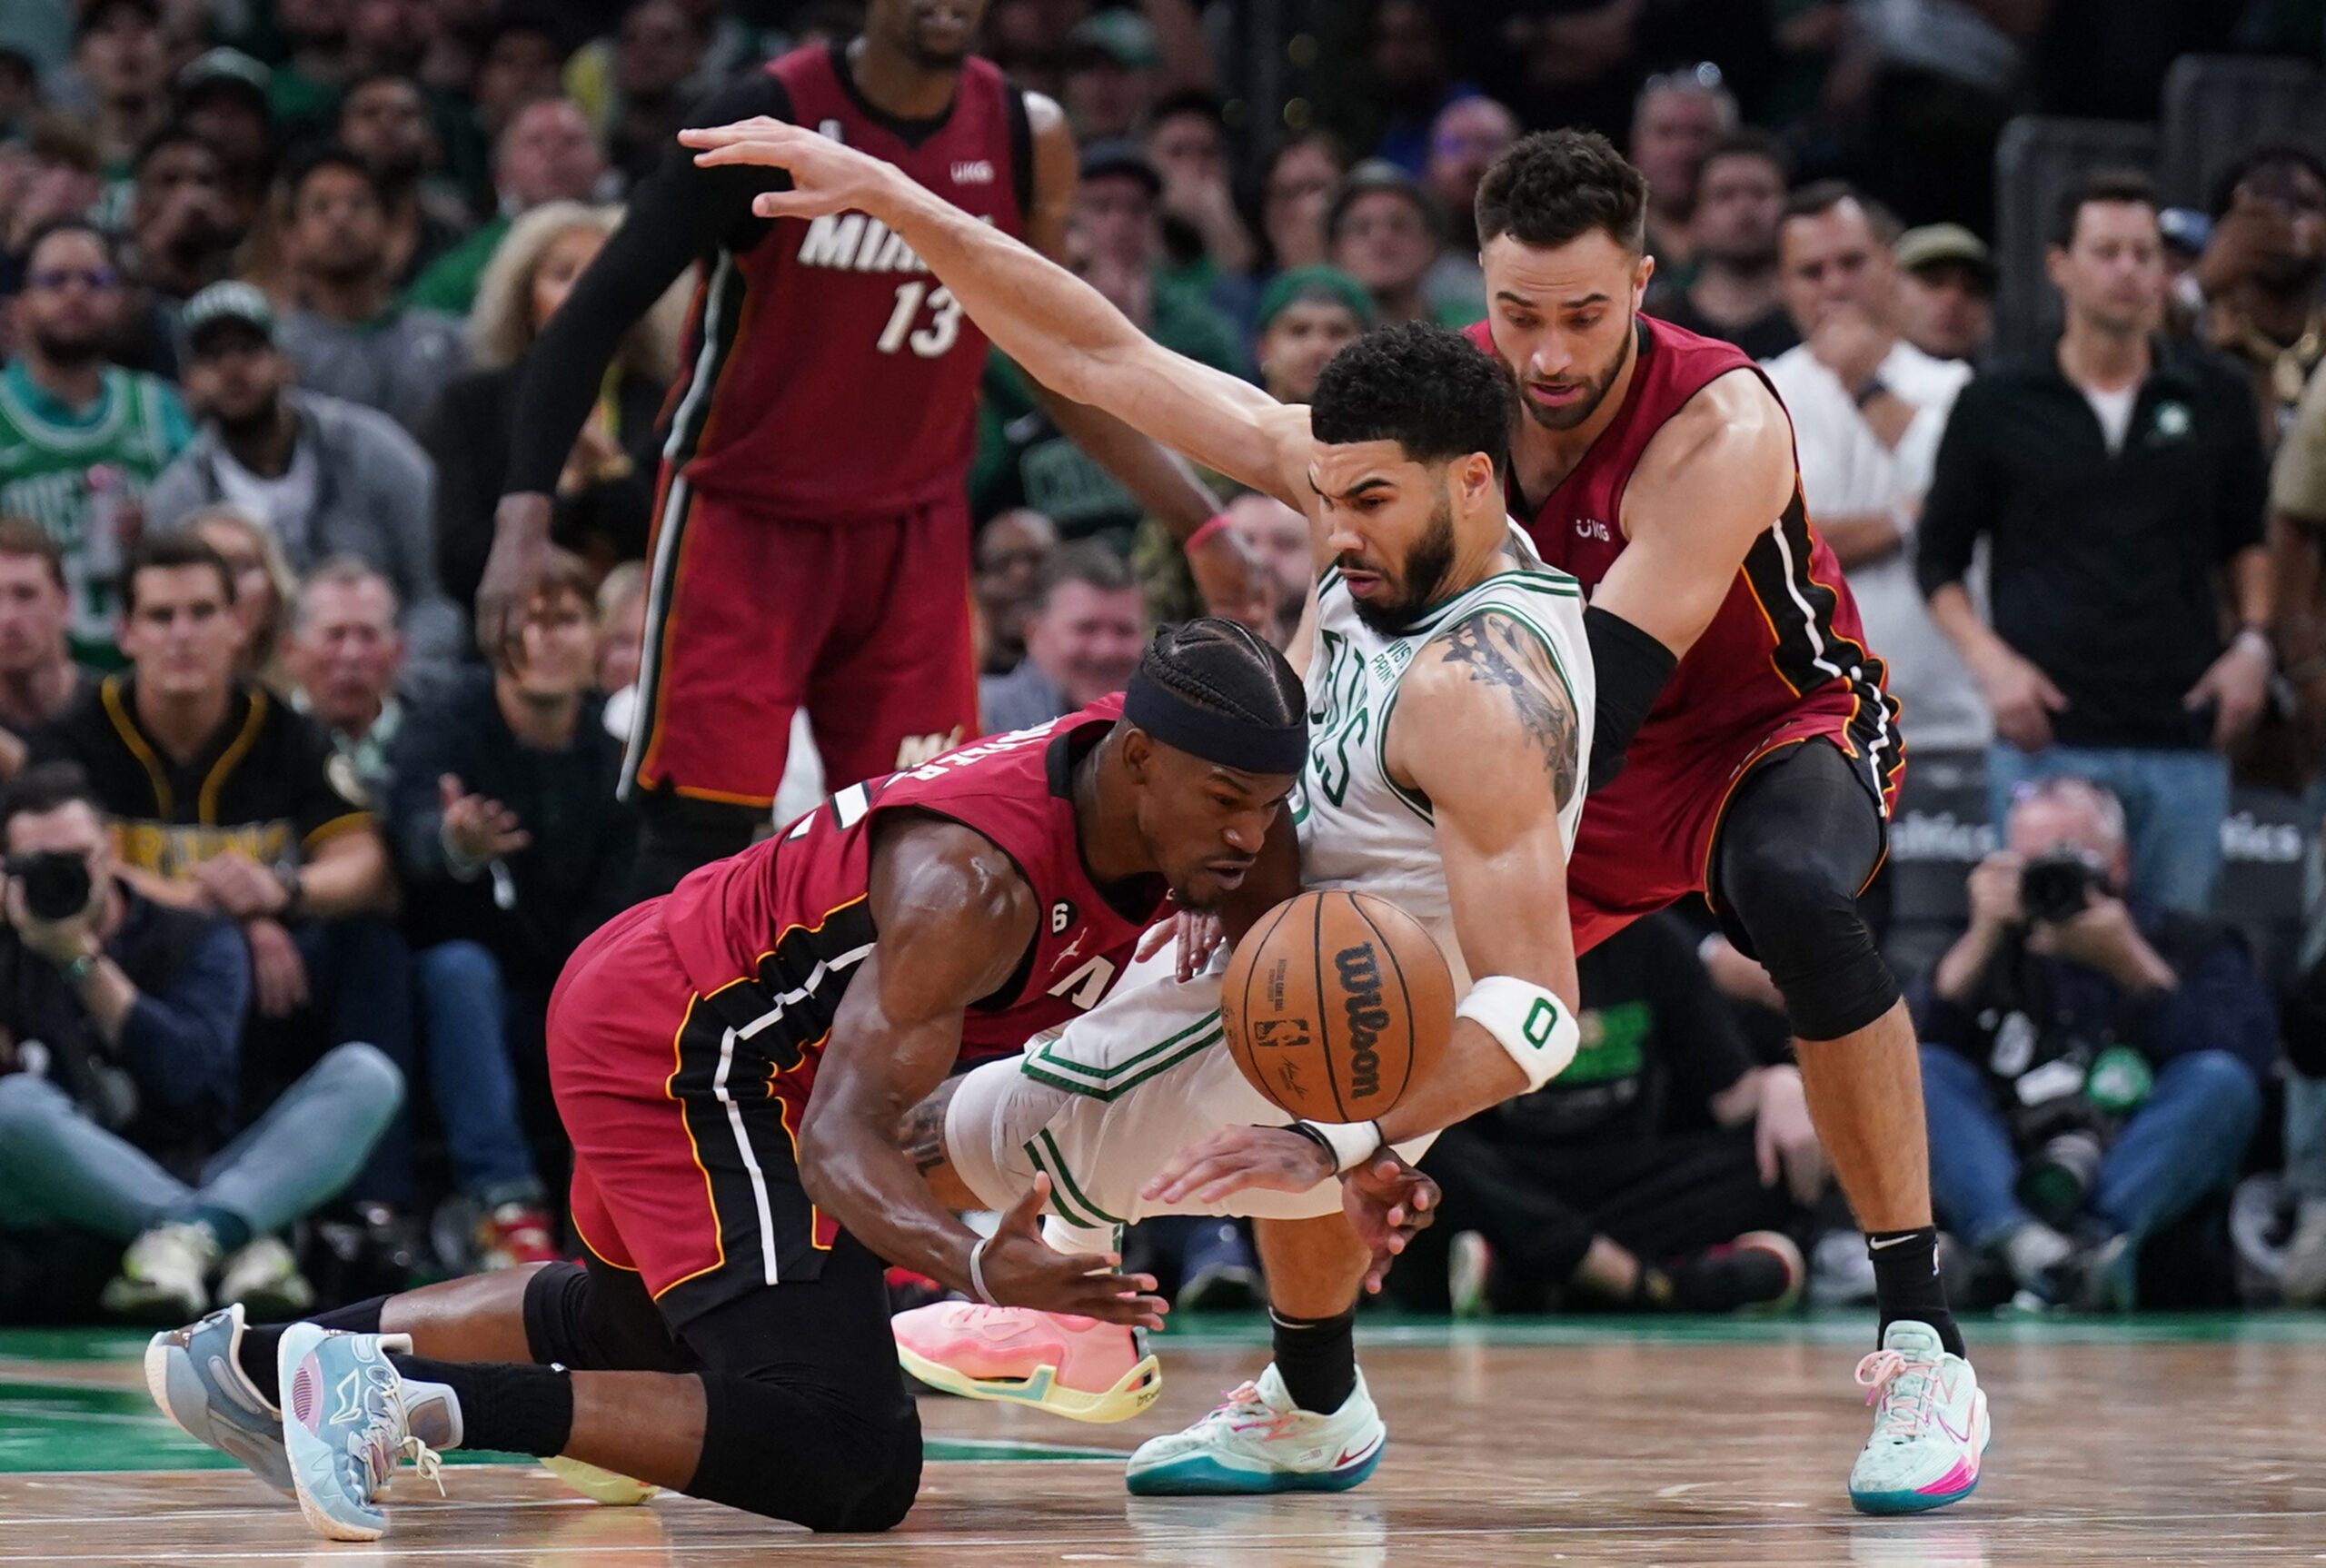 Derrick White strikes at buzzer, Celtics force Game 7 vs. Heat